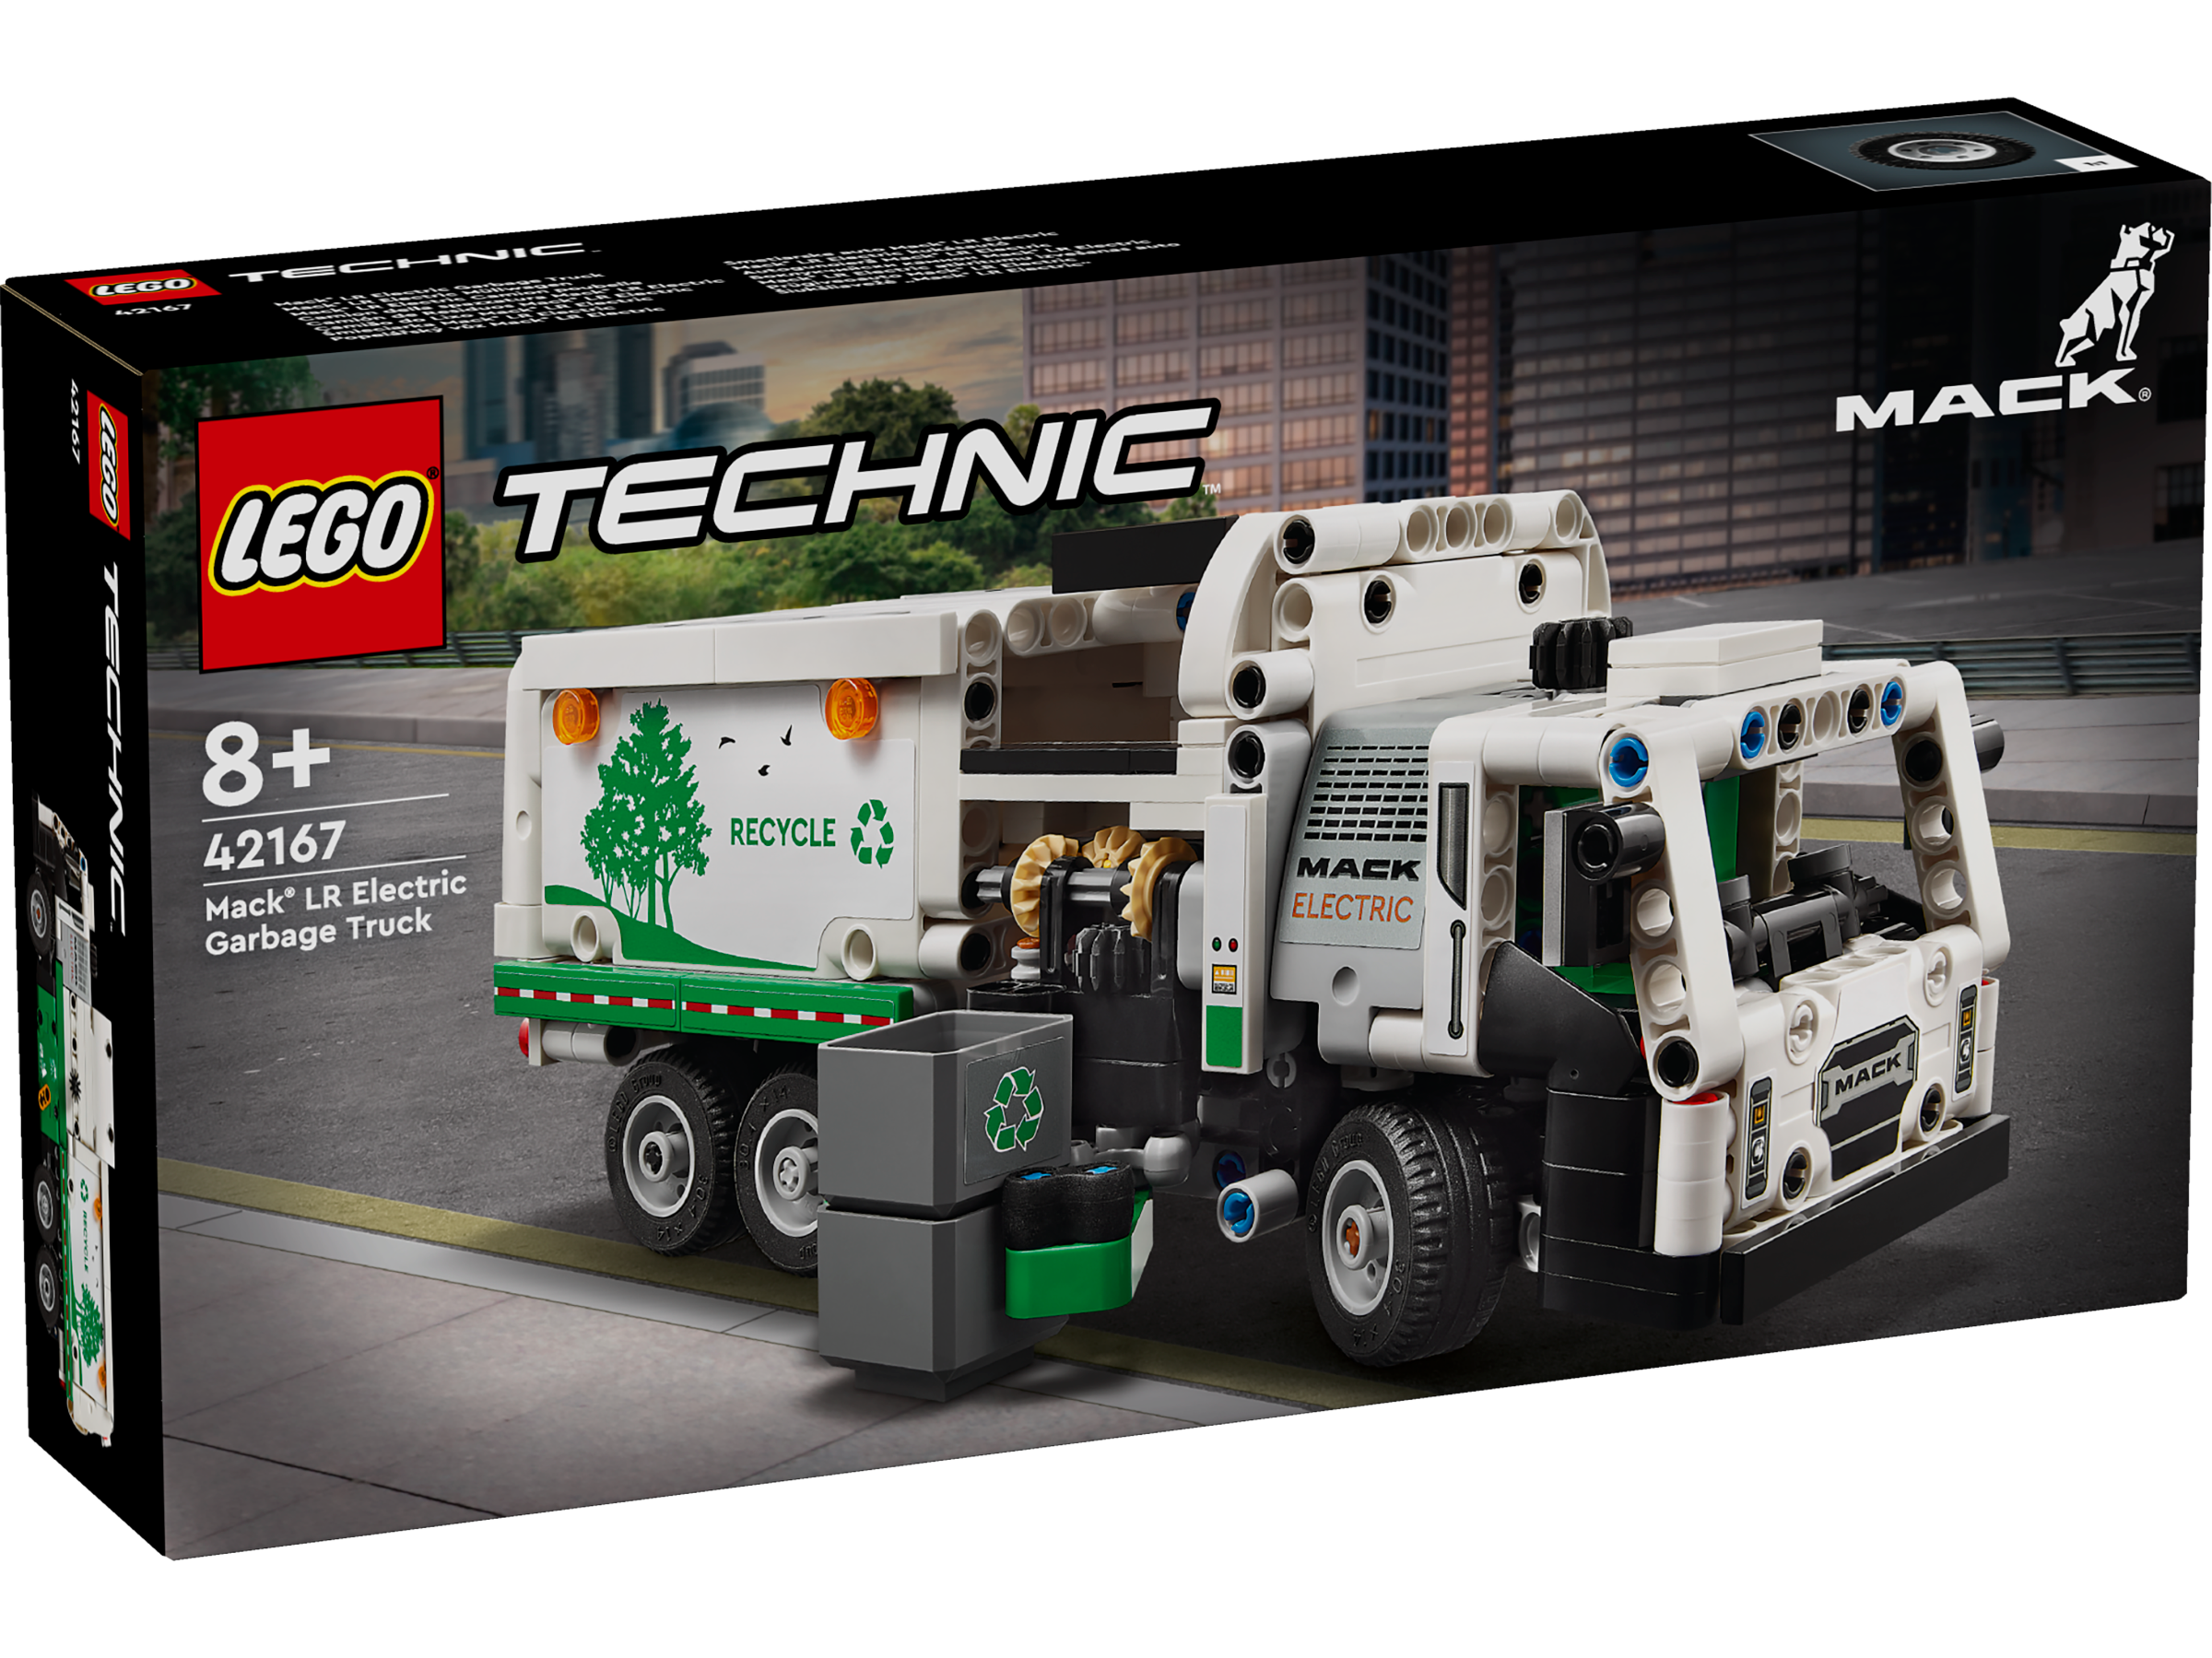 Lego 42167 Mack LR Electric Garbage